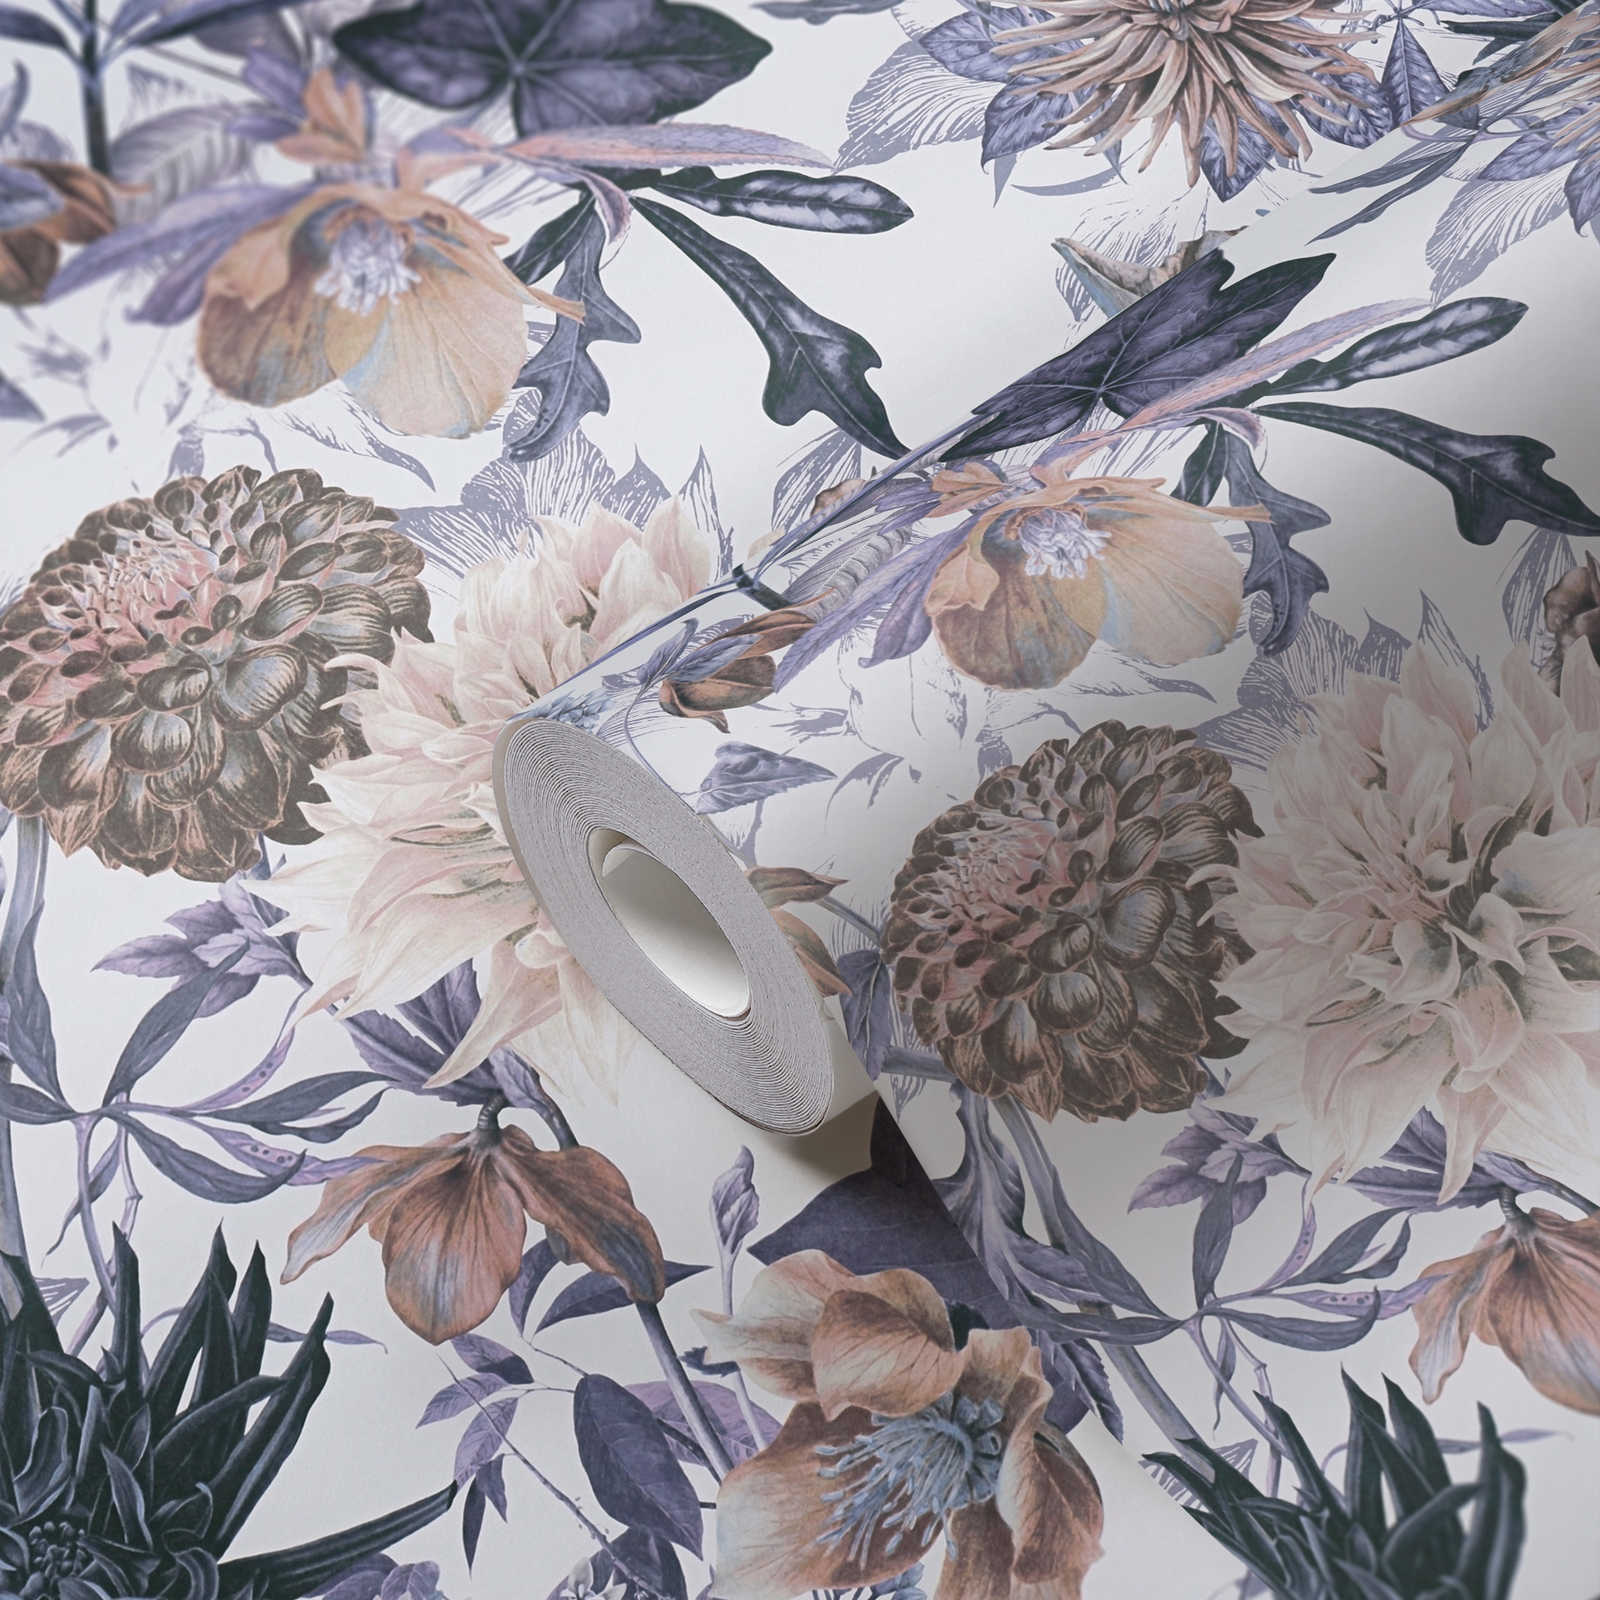             Blumentapete mit floralem Muster – Blau, Braun, Grau
        